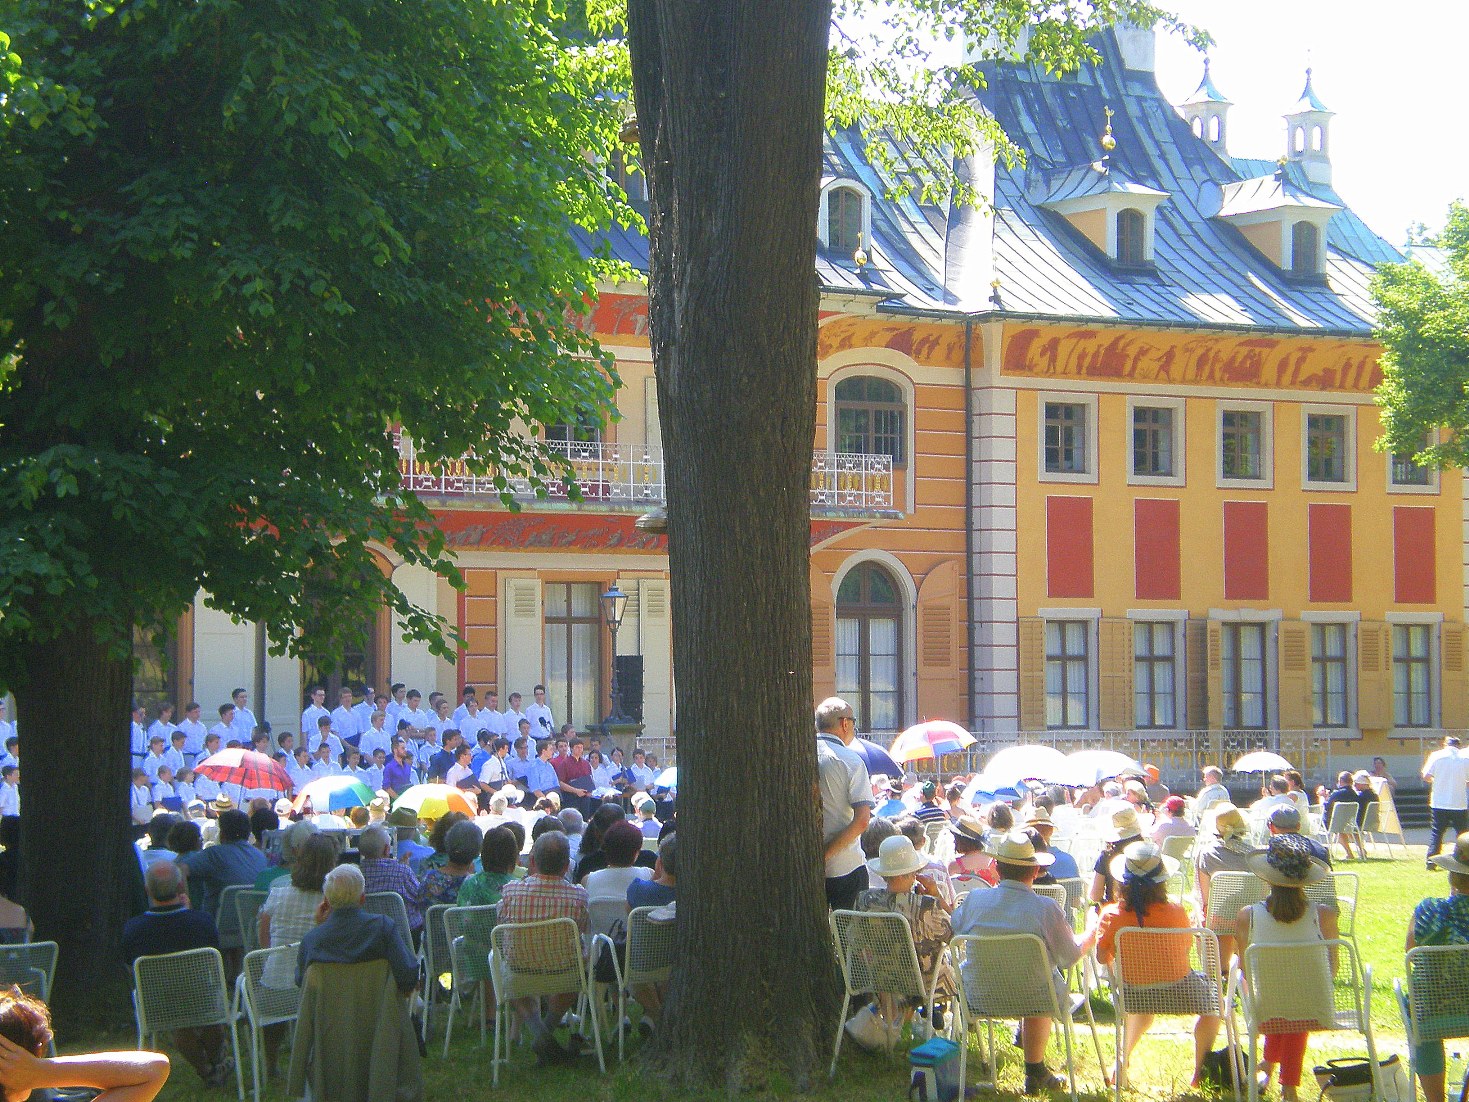 Kreuzchor concert at Pillnitz